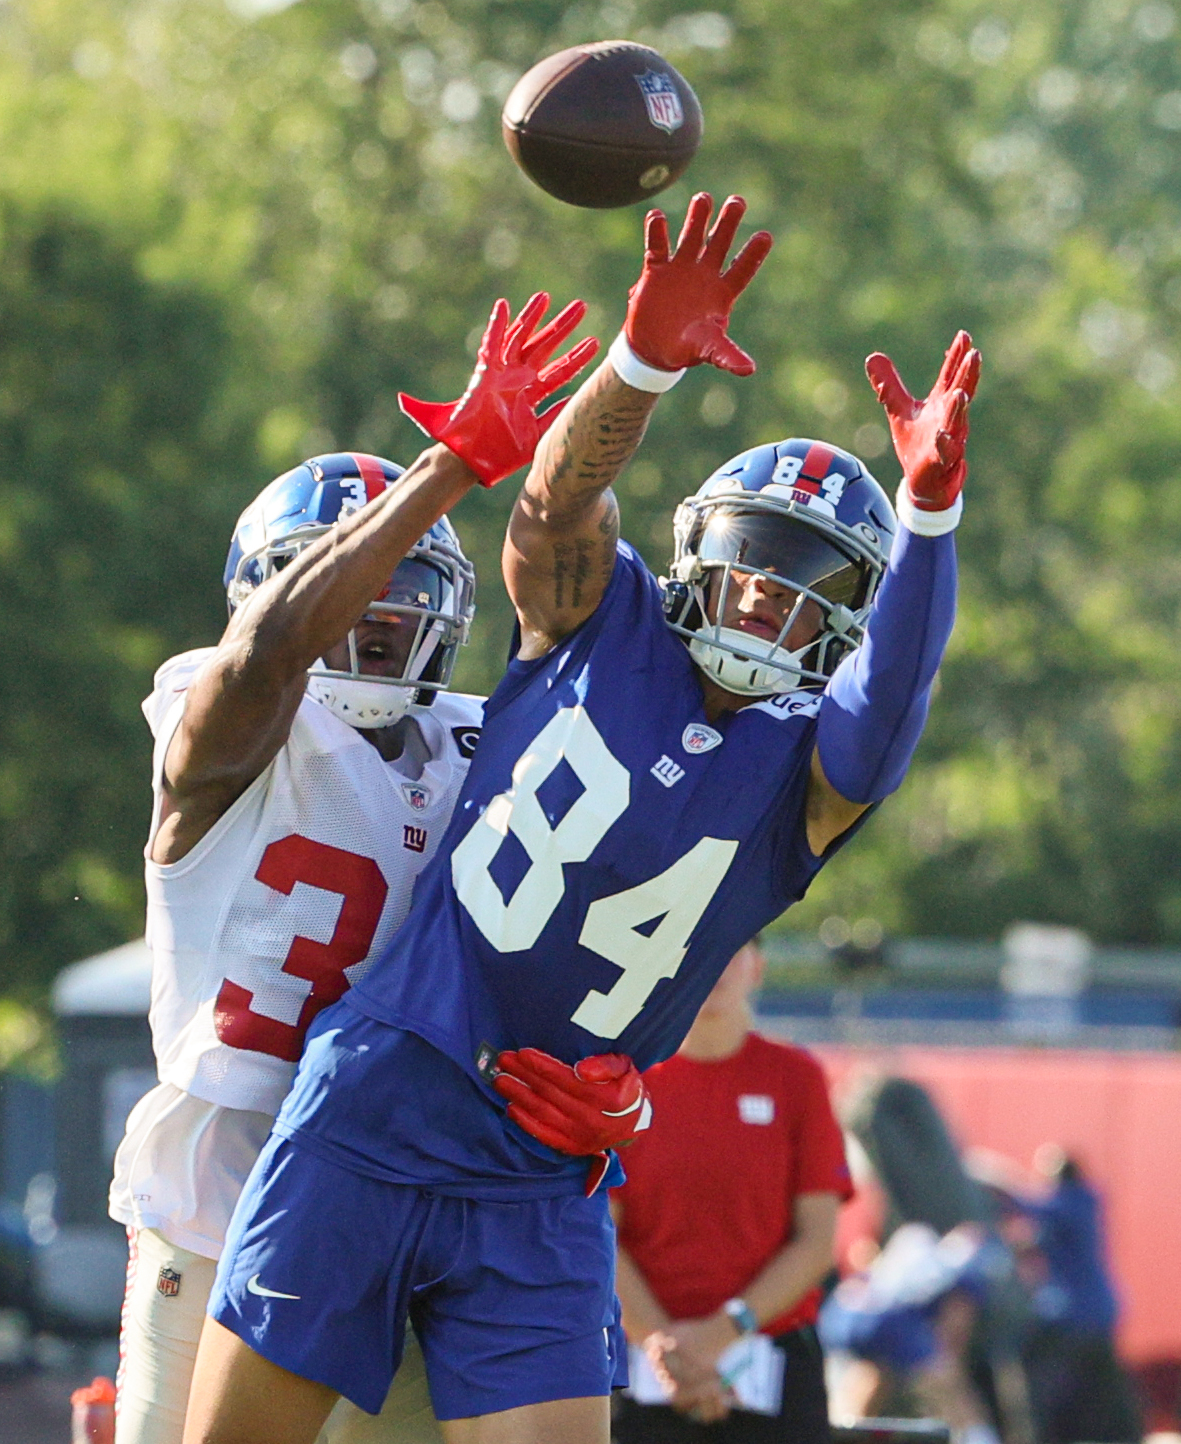 Jalin Hyatt hauls in first NFL touchdown catch for New York Giants